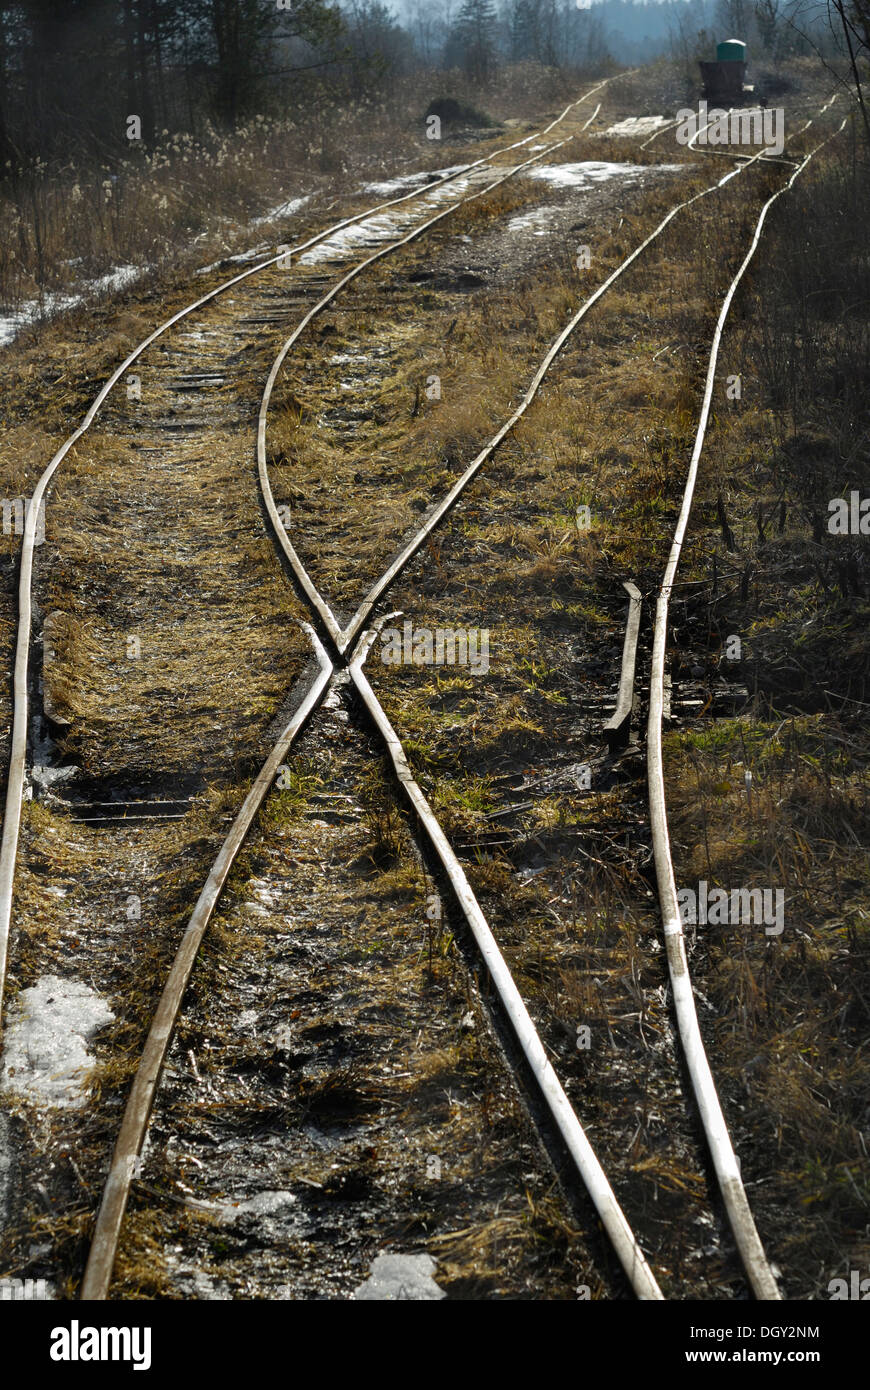 Railway tracks of a Feldbahn or narrow gauge railway, backlighting, old peat extraction area, Nicklheim, Bavaria Stock Photo